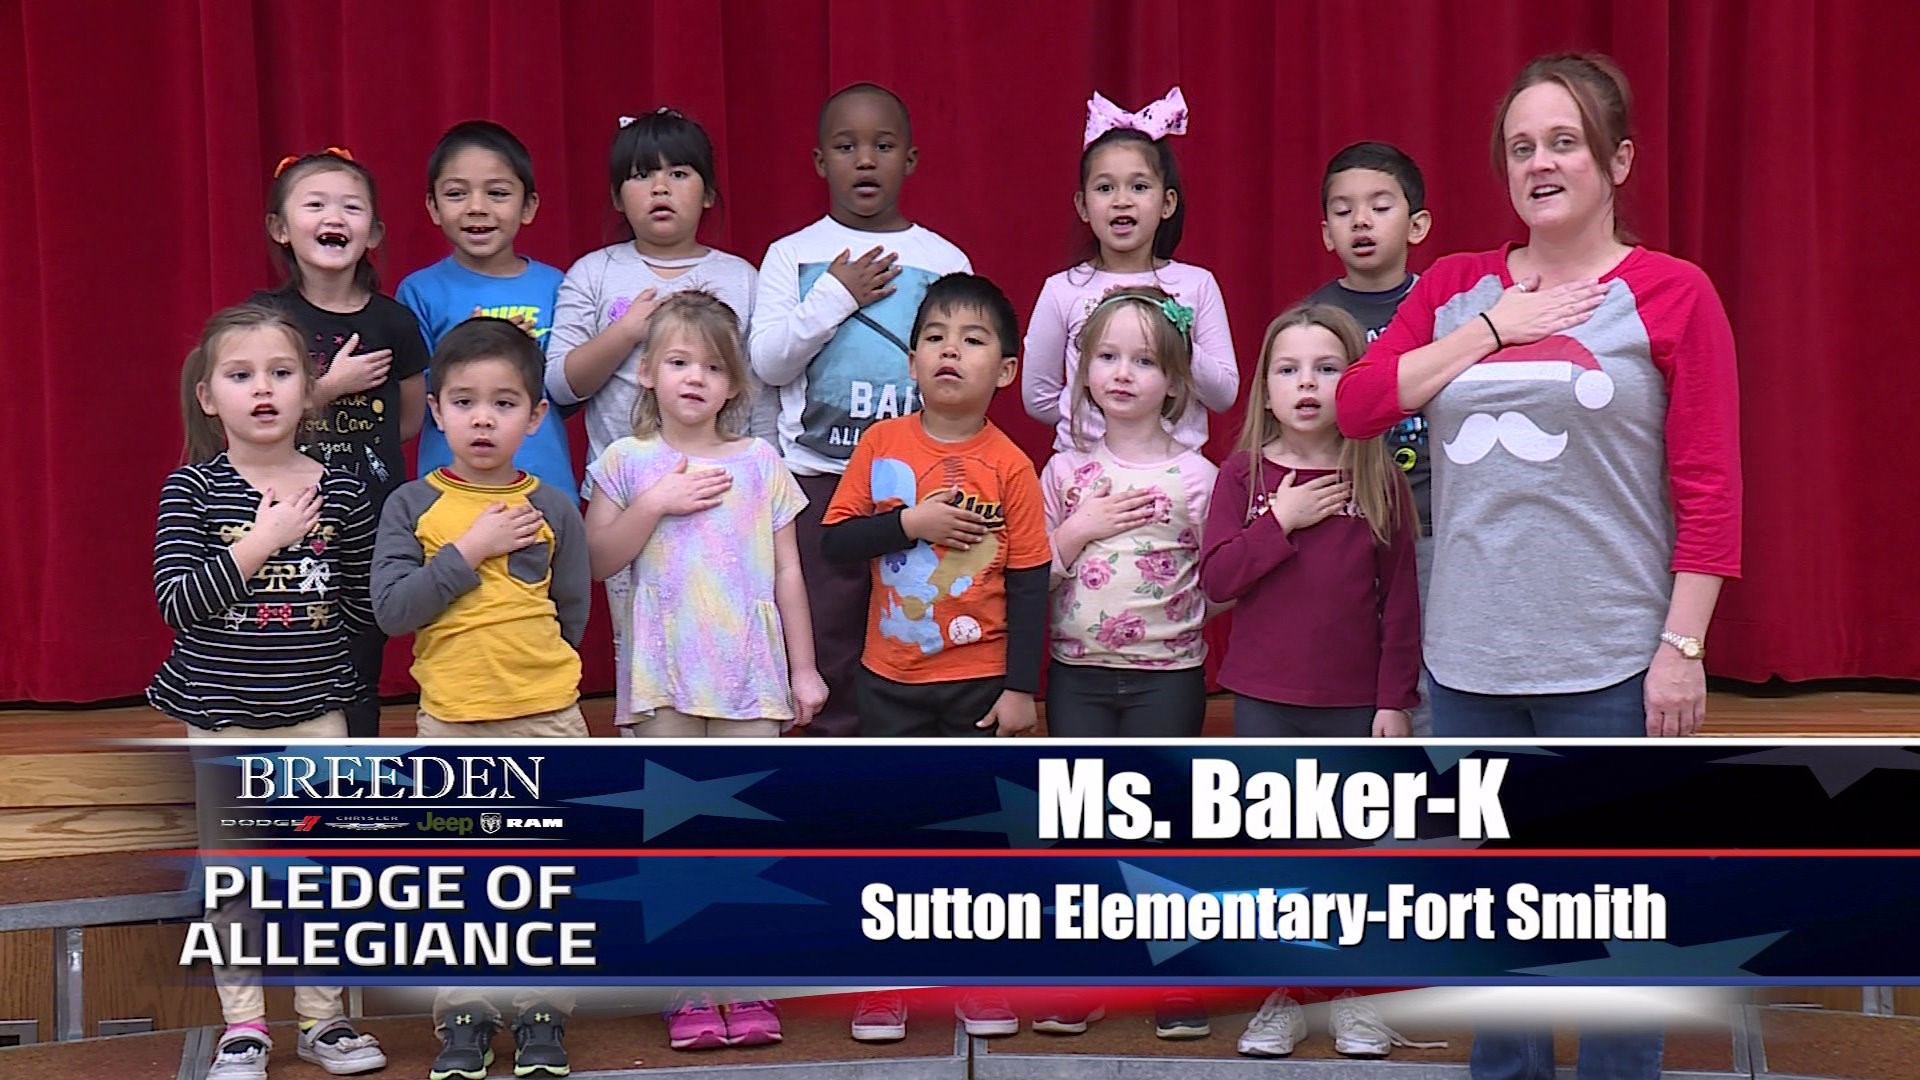 Ms. Baker  K Sutton Elementary, Fort Smith